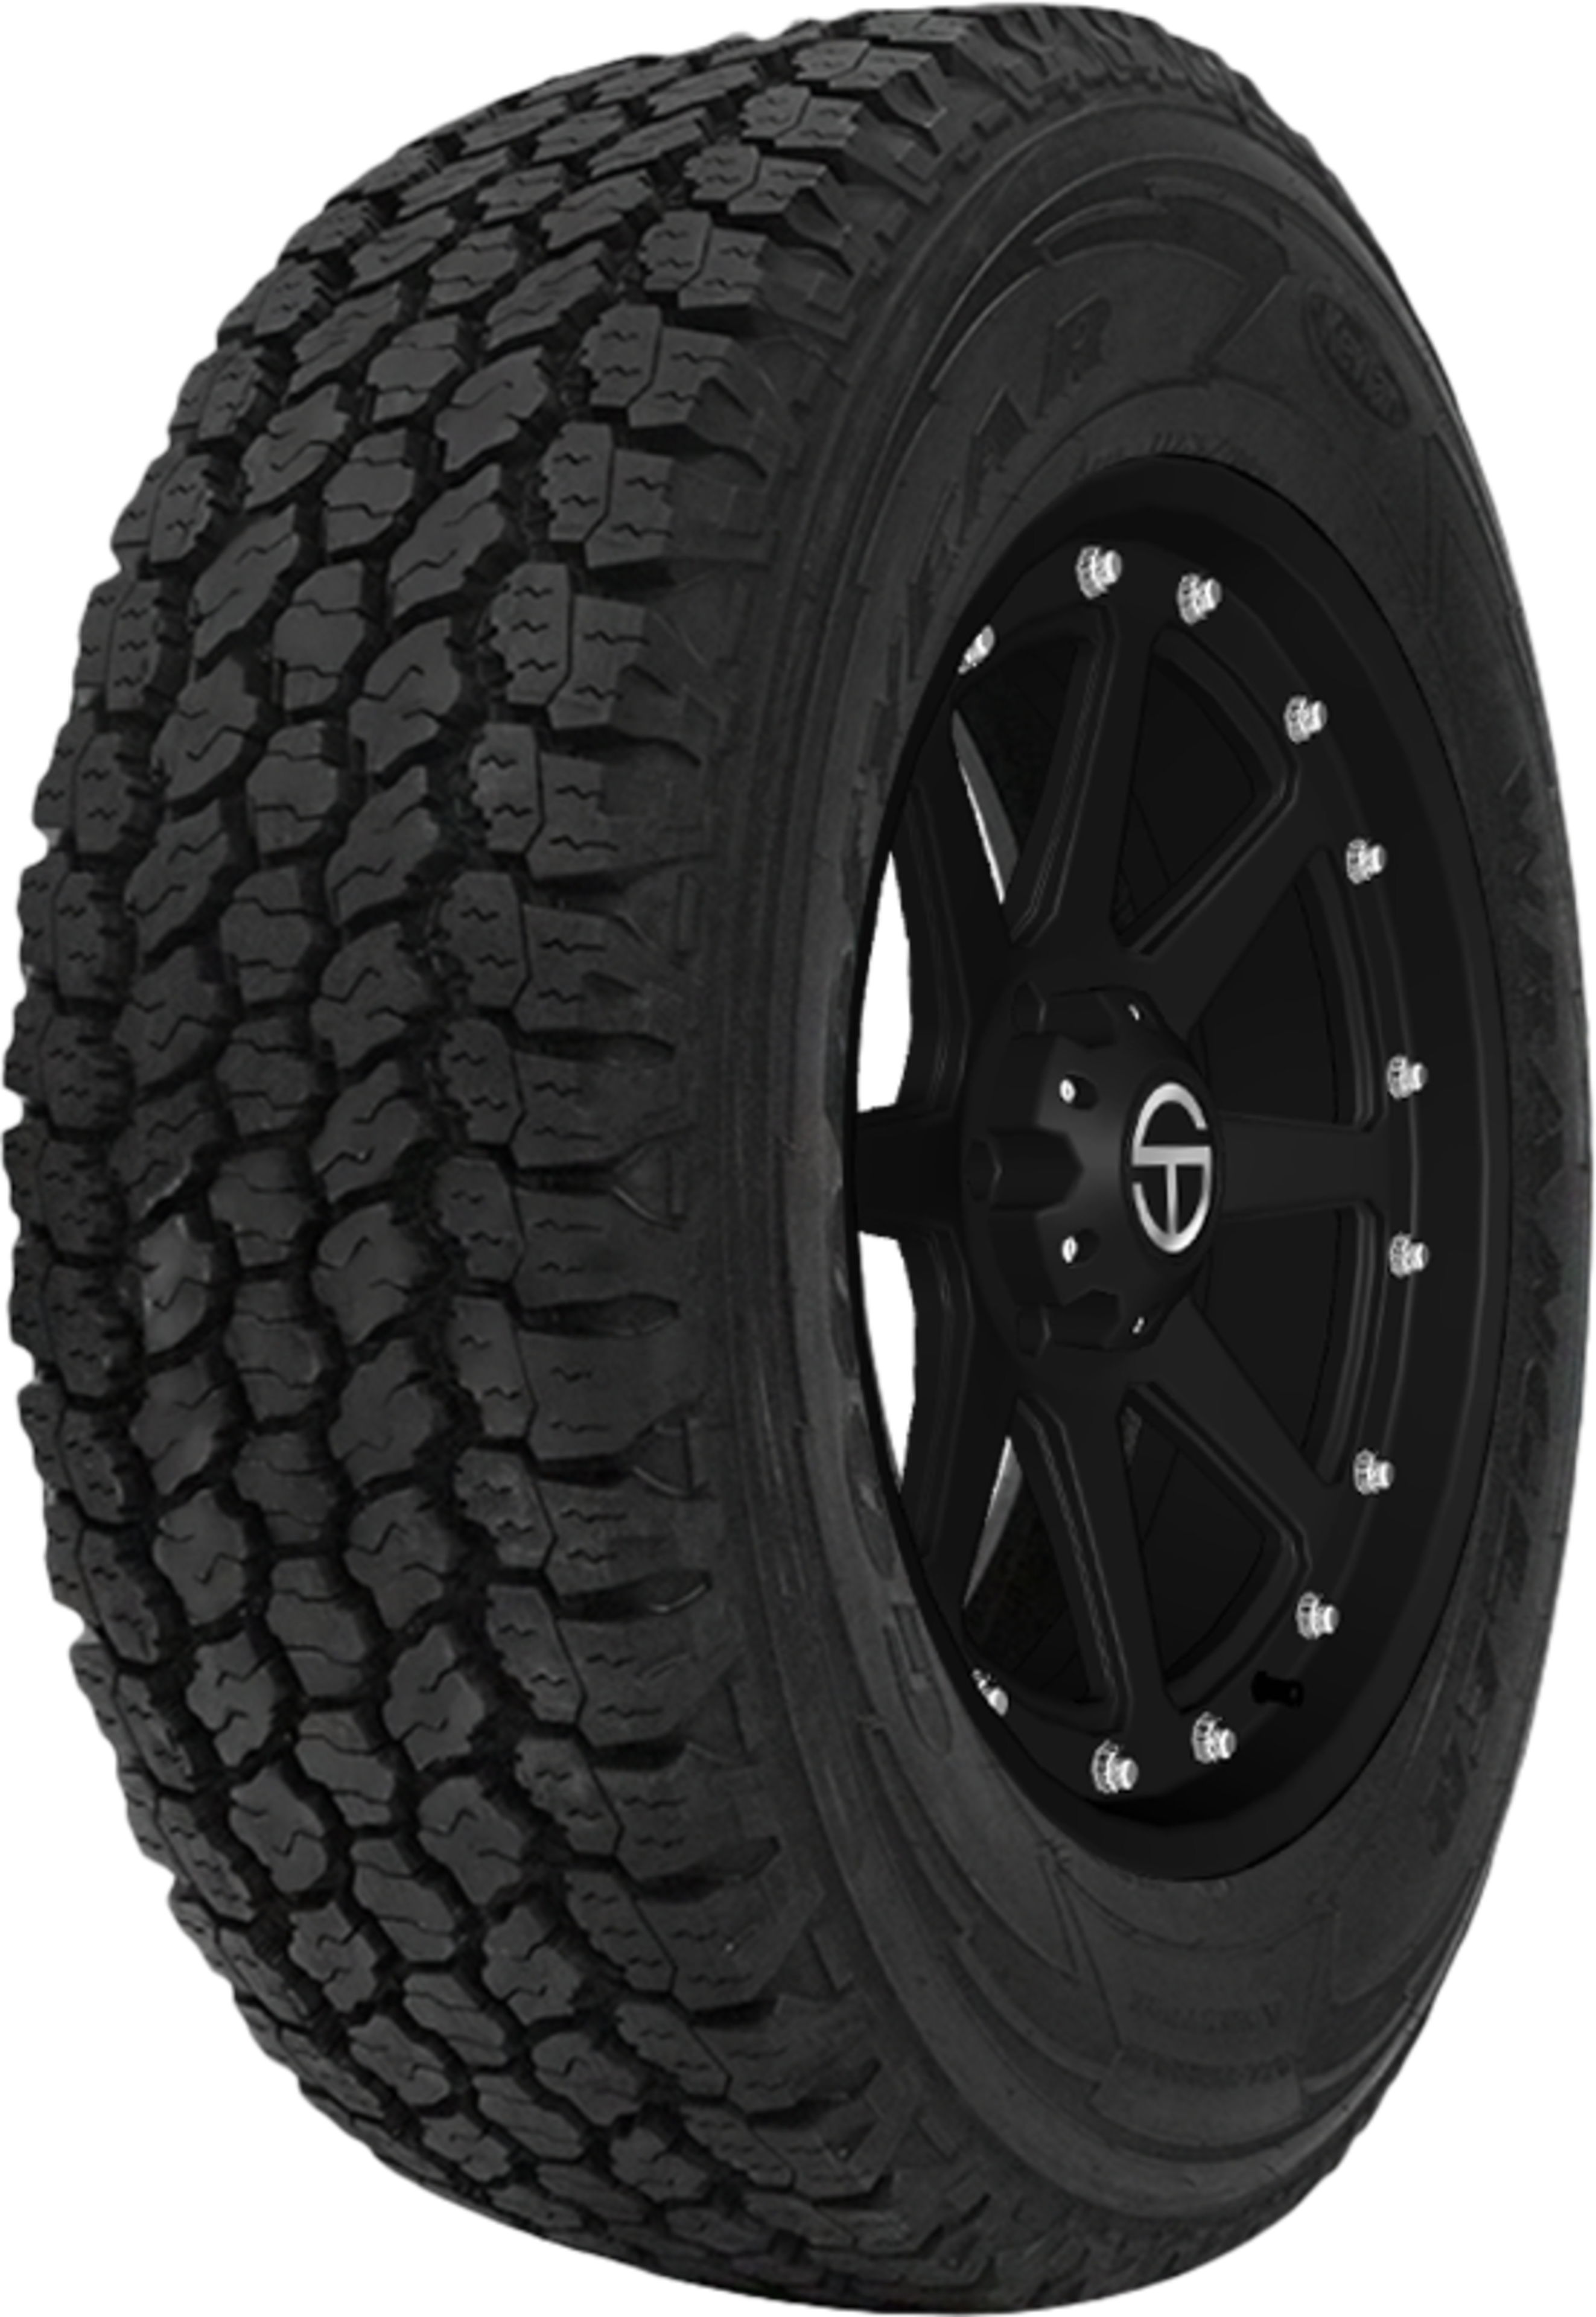 Buy Goodyear Wrangler All-Terrain Adventure with Kevlar LT265/70R17 Tires |  SimpleTire